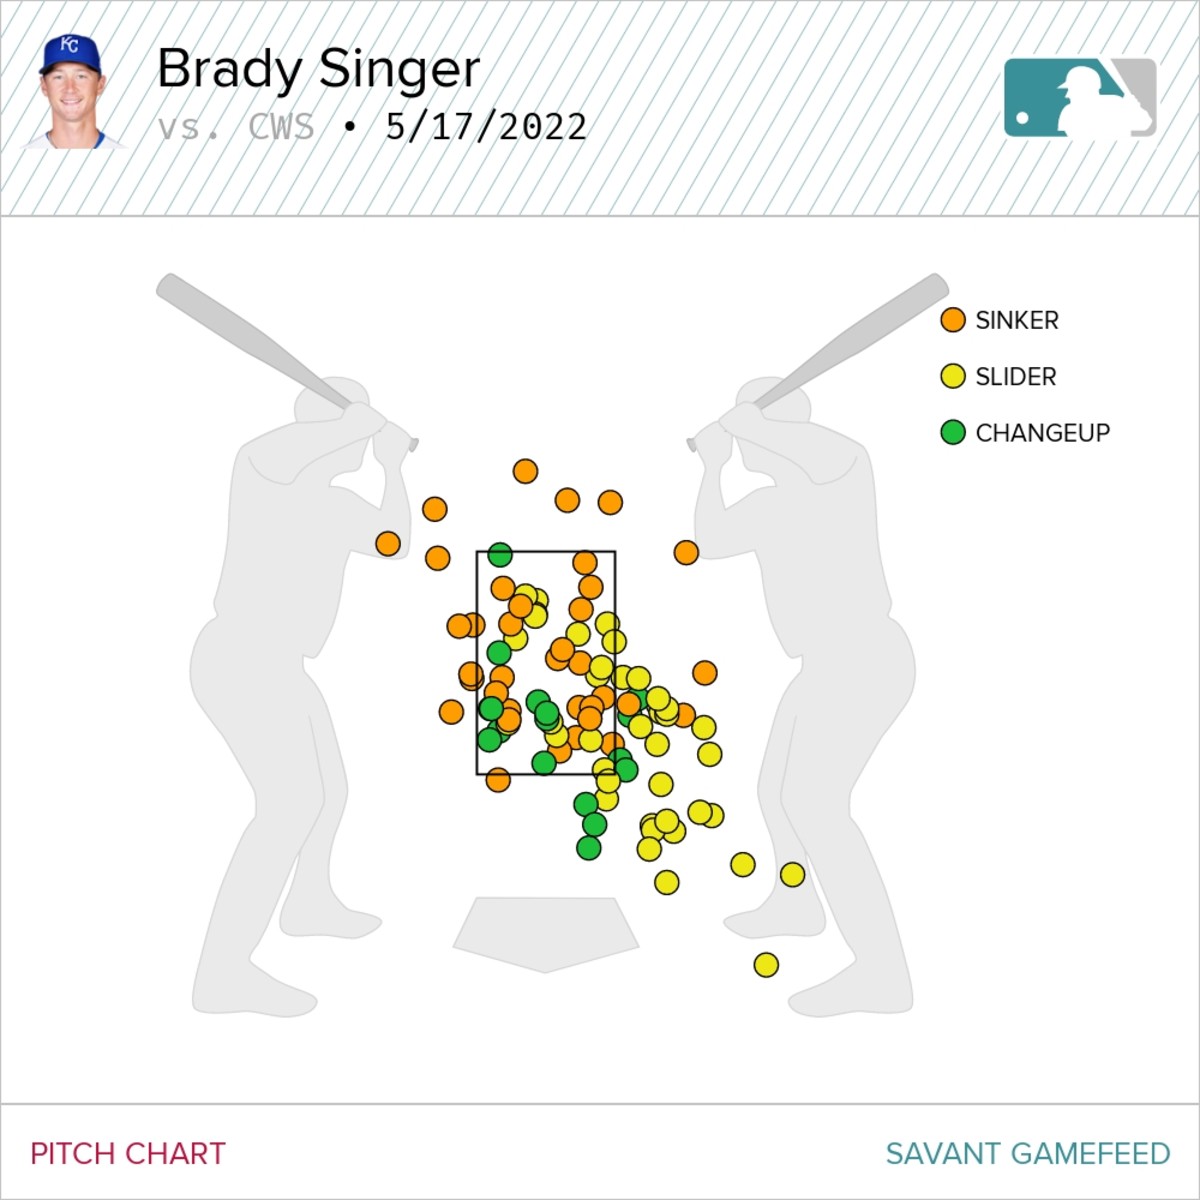 Brady Singer's pitch chart, courtesy of Baseball Savant. 